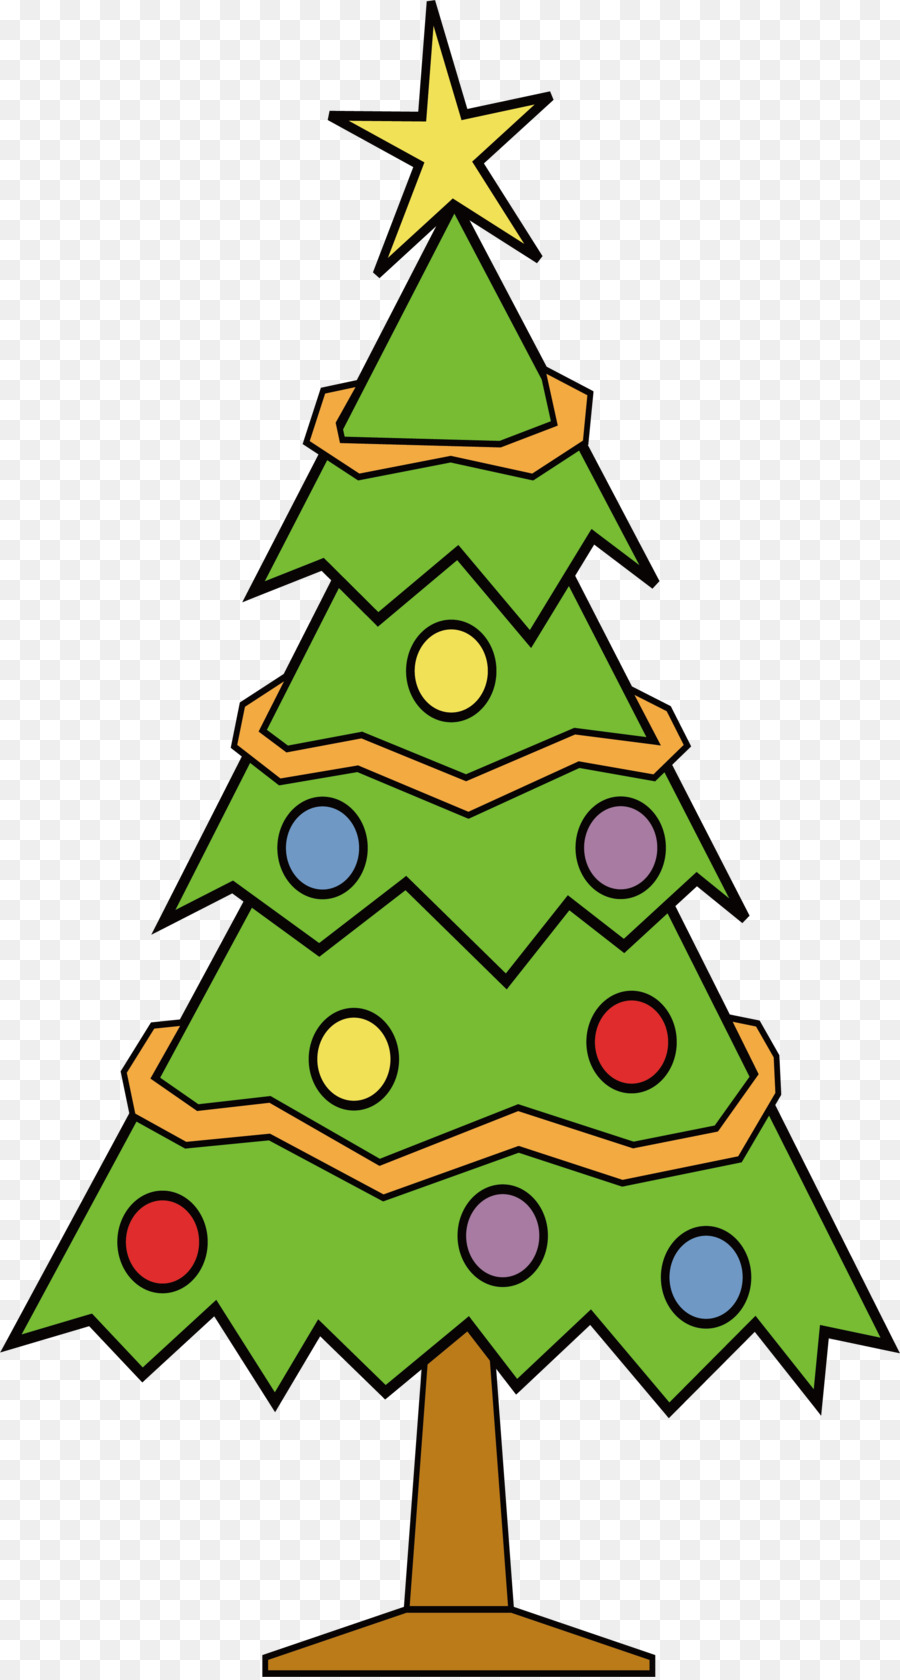 Christmas tree Kostenloses content clipart - Exquisites Weihnachtsbaum Design